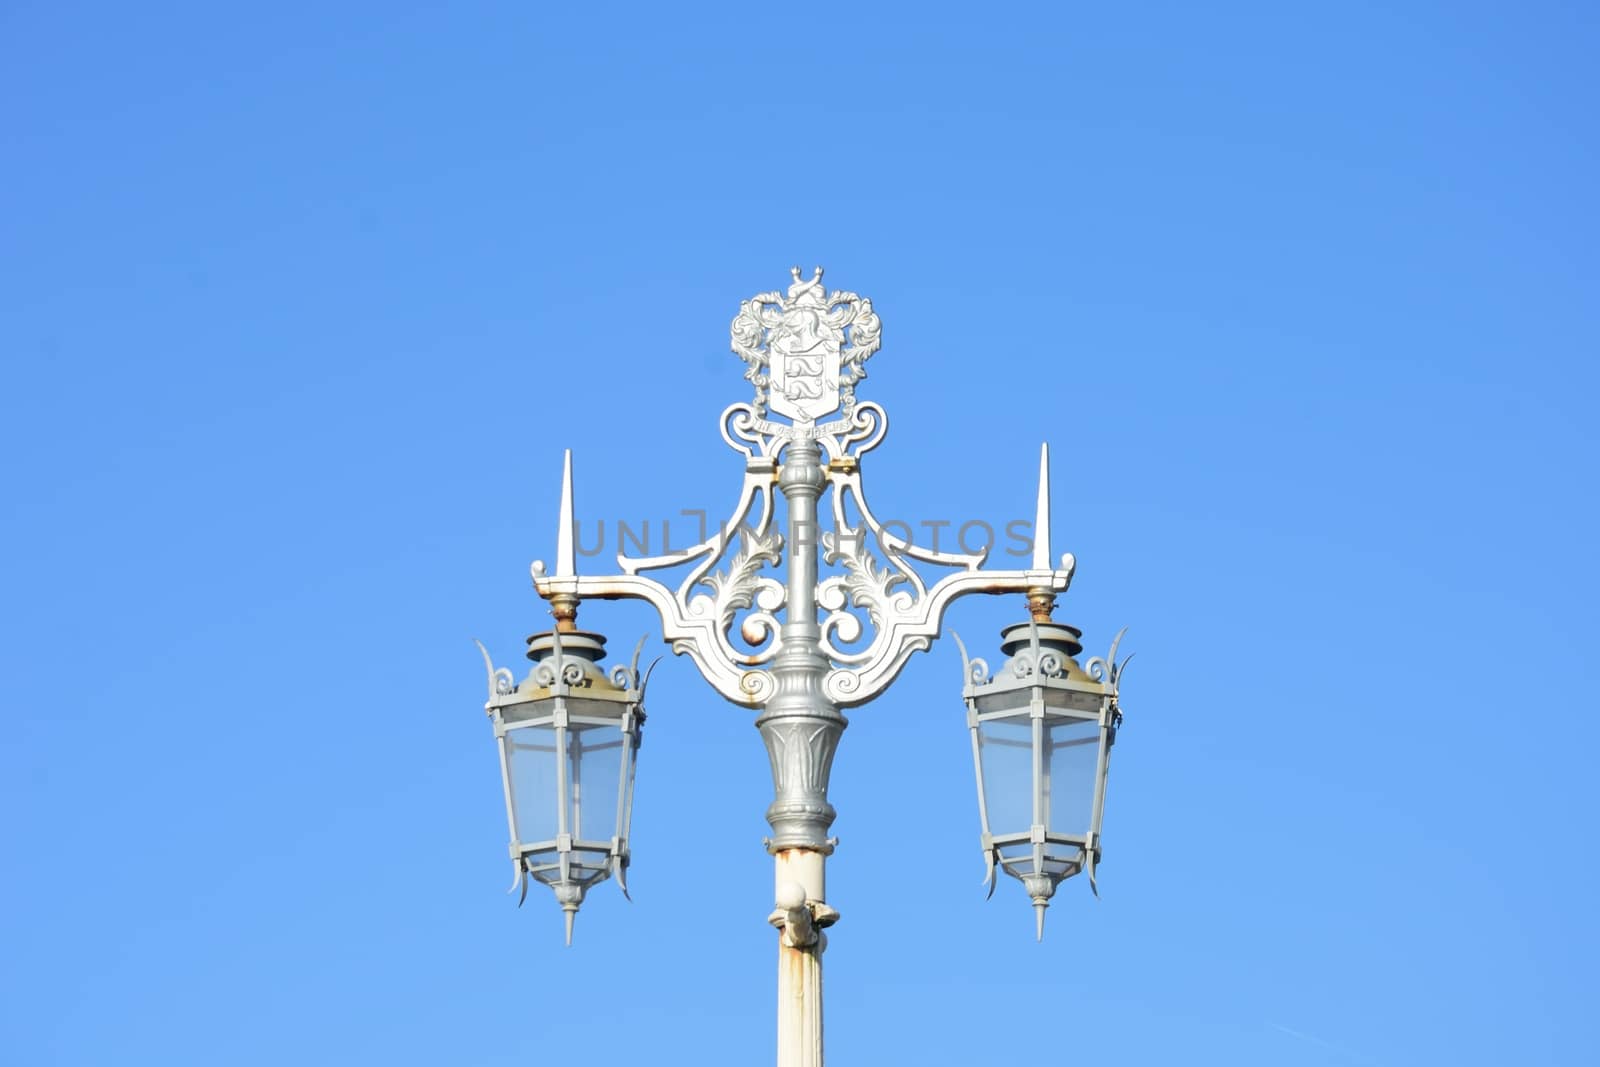 Ornate street lamps brighton by pauws99